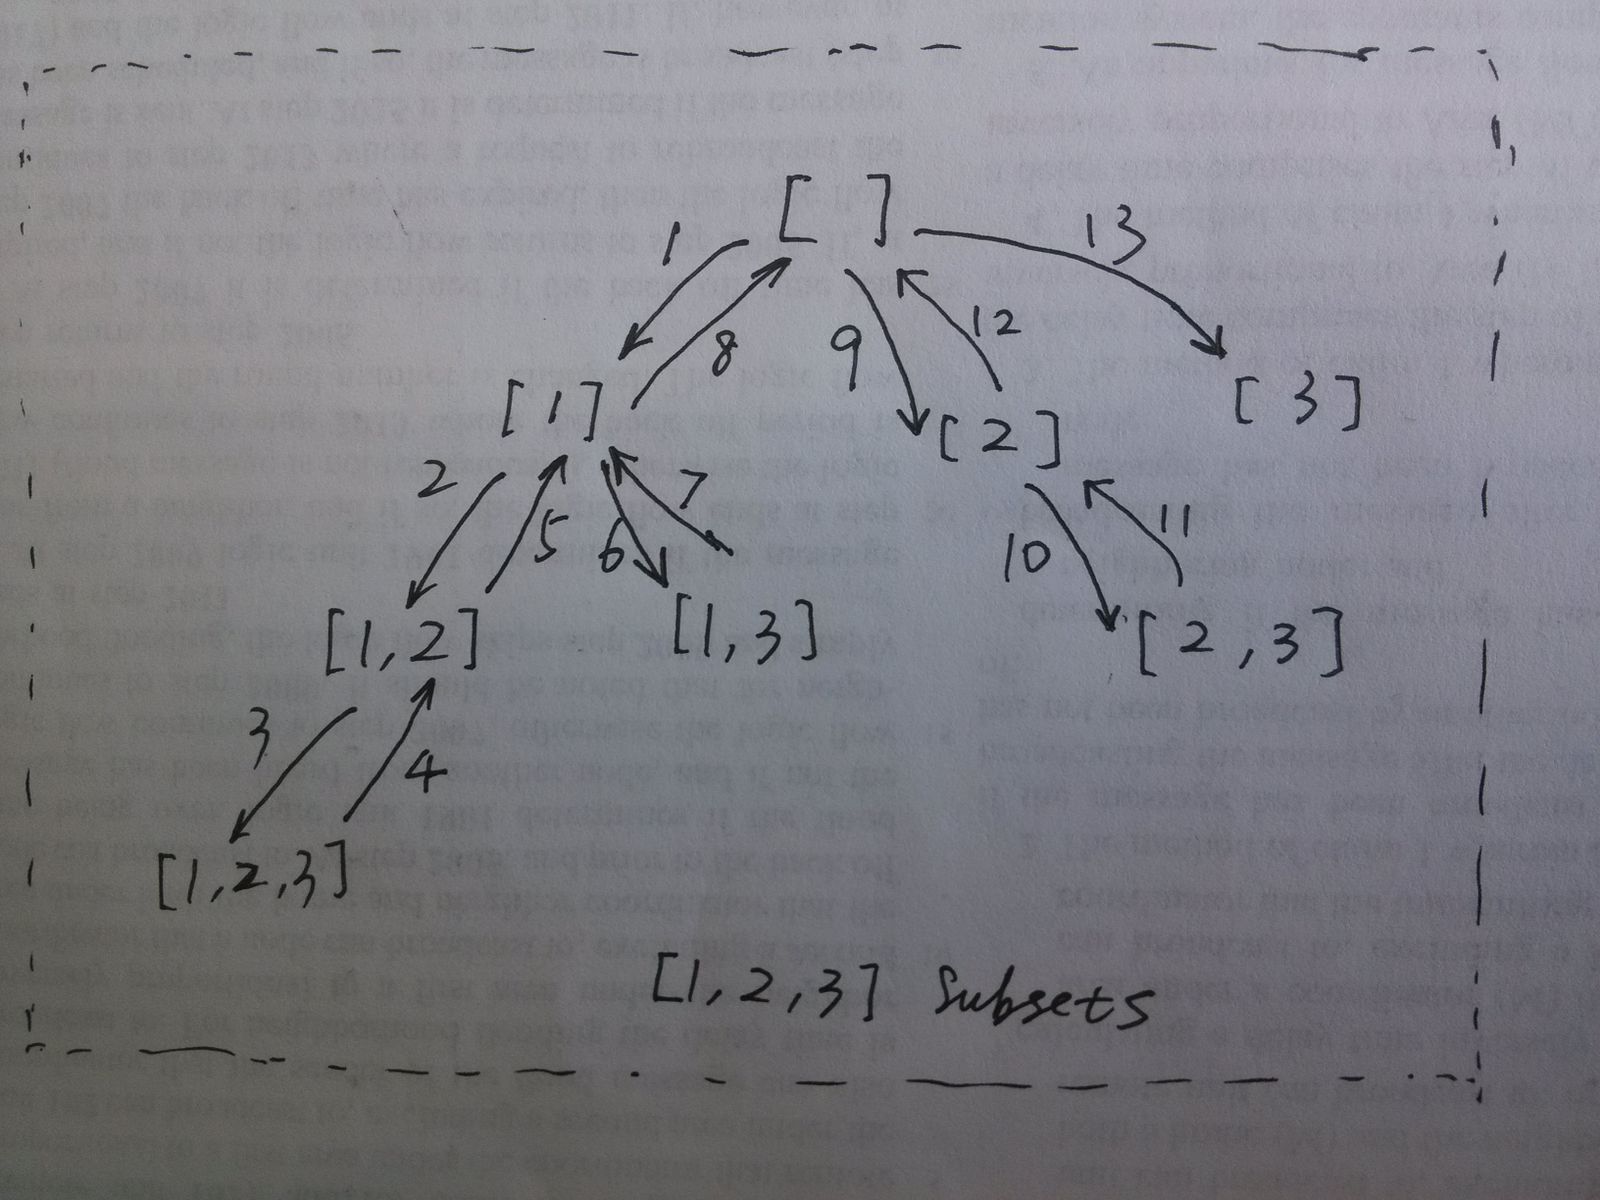 Subsets運行遞迴調用圖